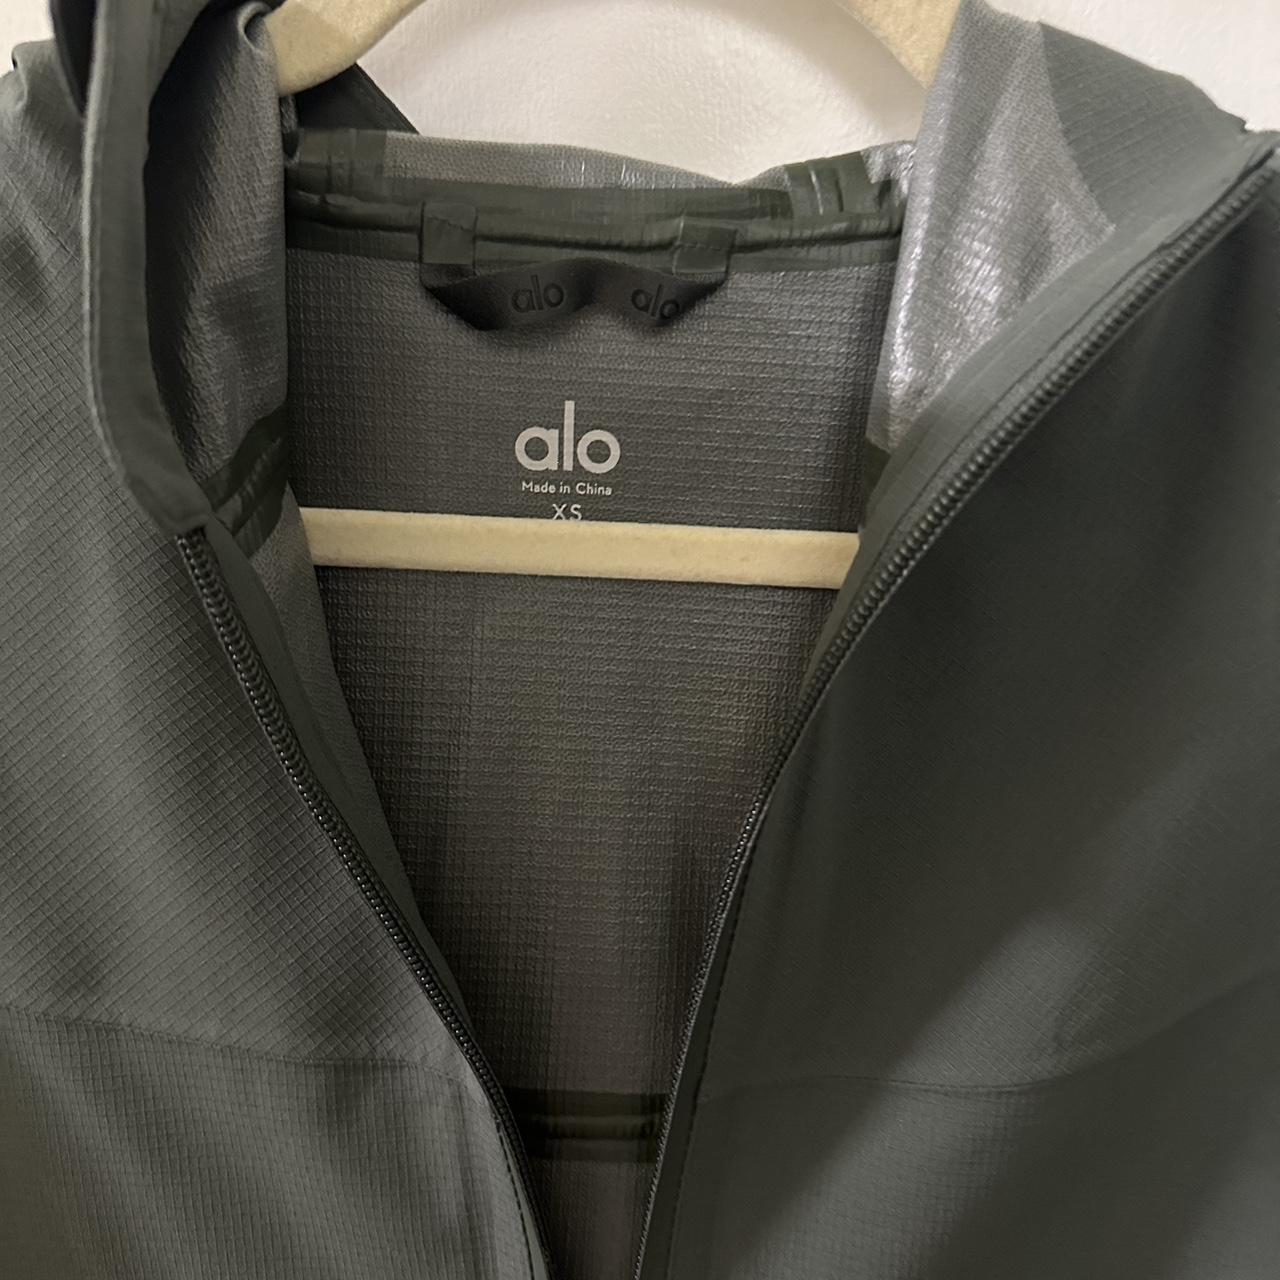 Alo Yoga Icebreaker Jacket size XS in toasted - Depop